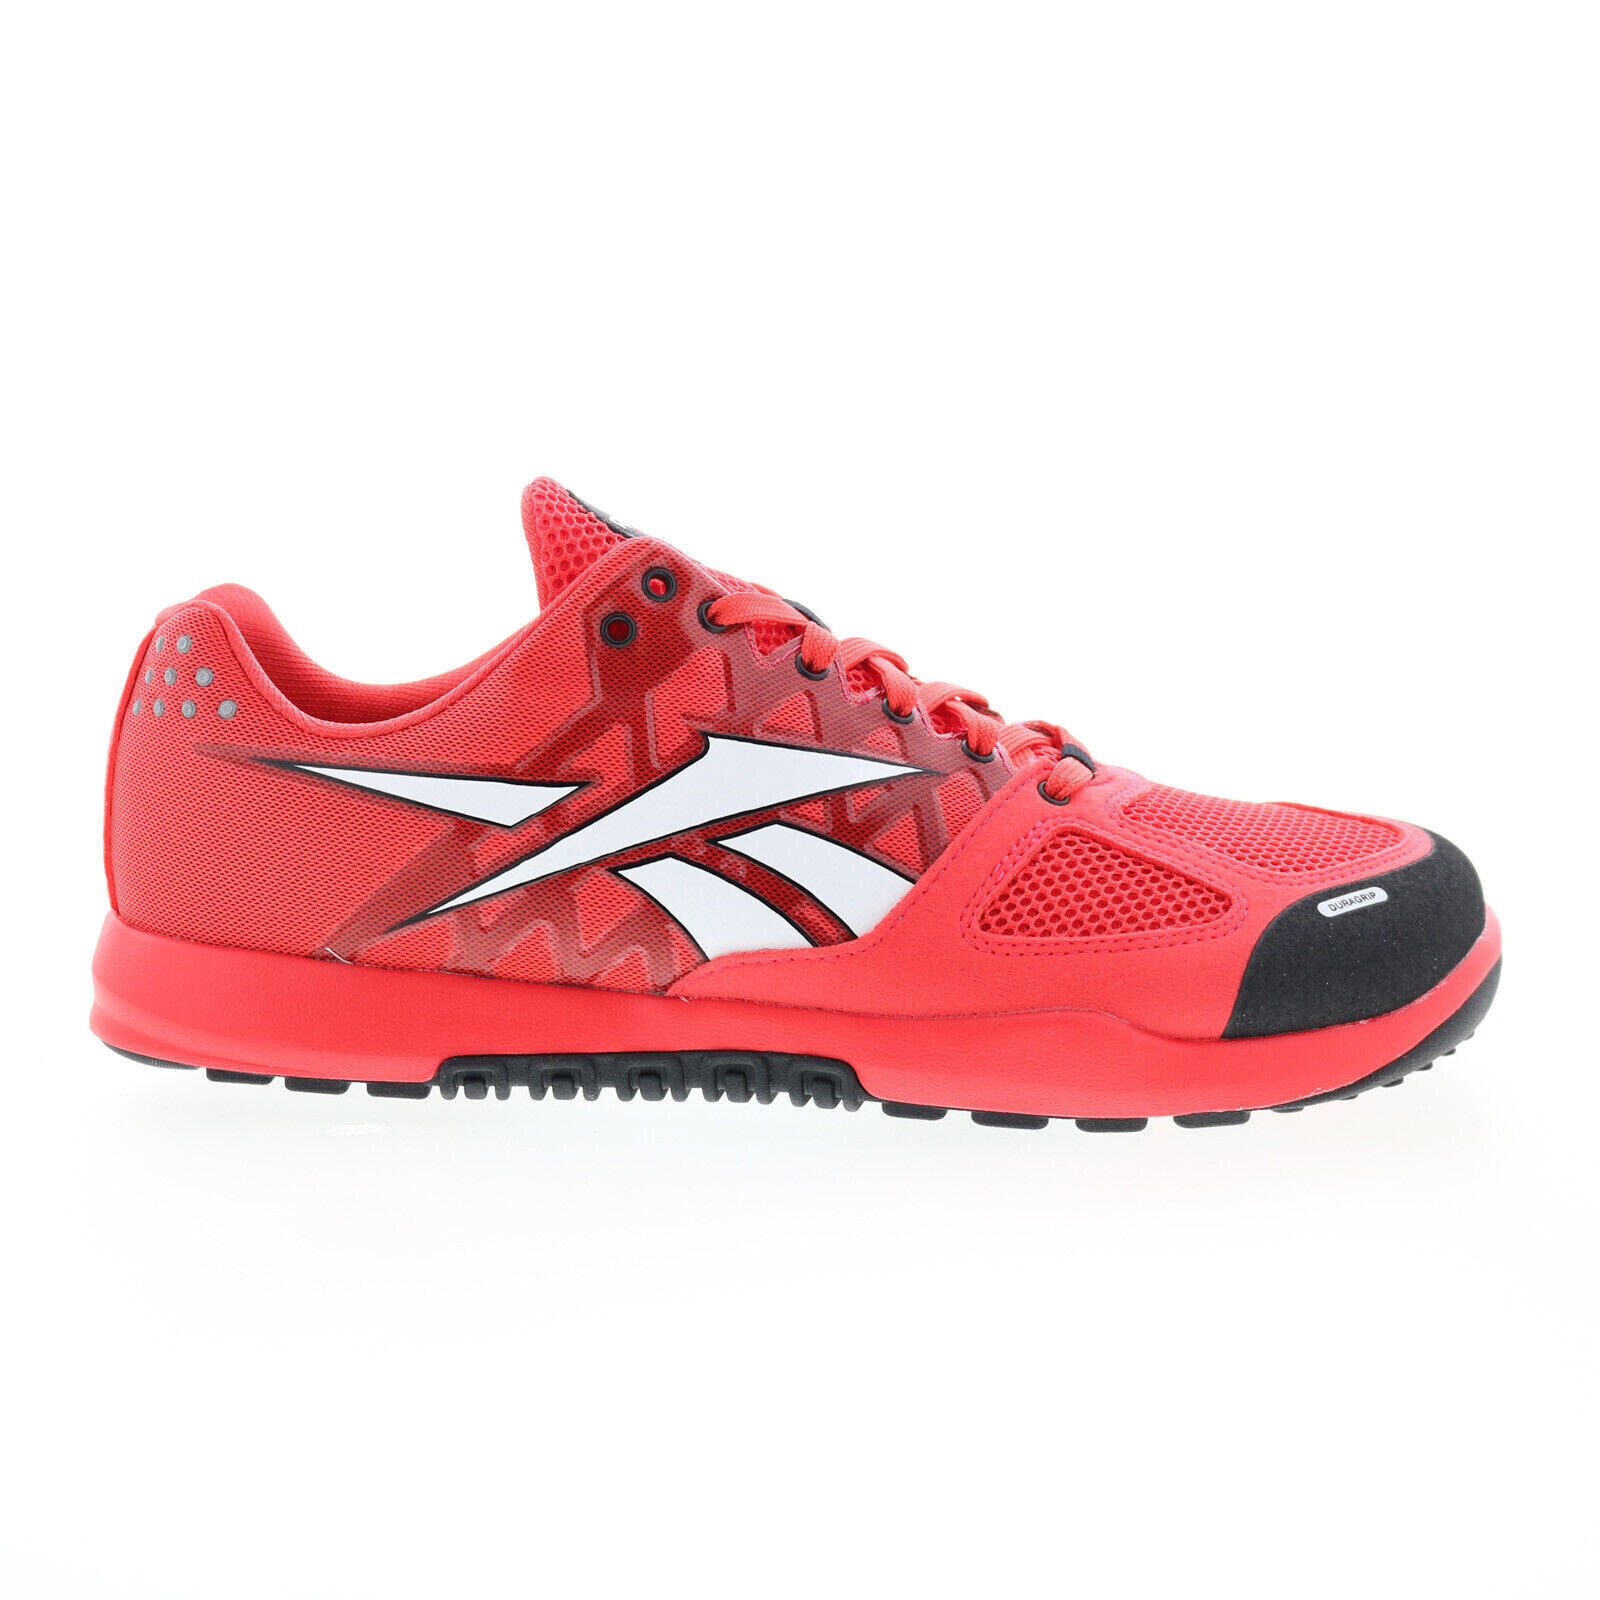 Reebok Nano 2.0 IE6696 Mens Red Canvas Athletic Cross Training Shoes